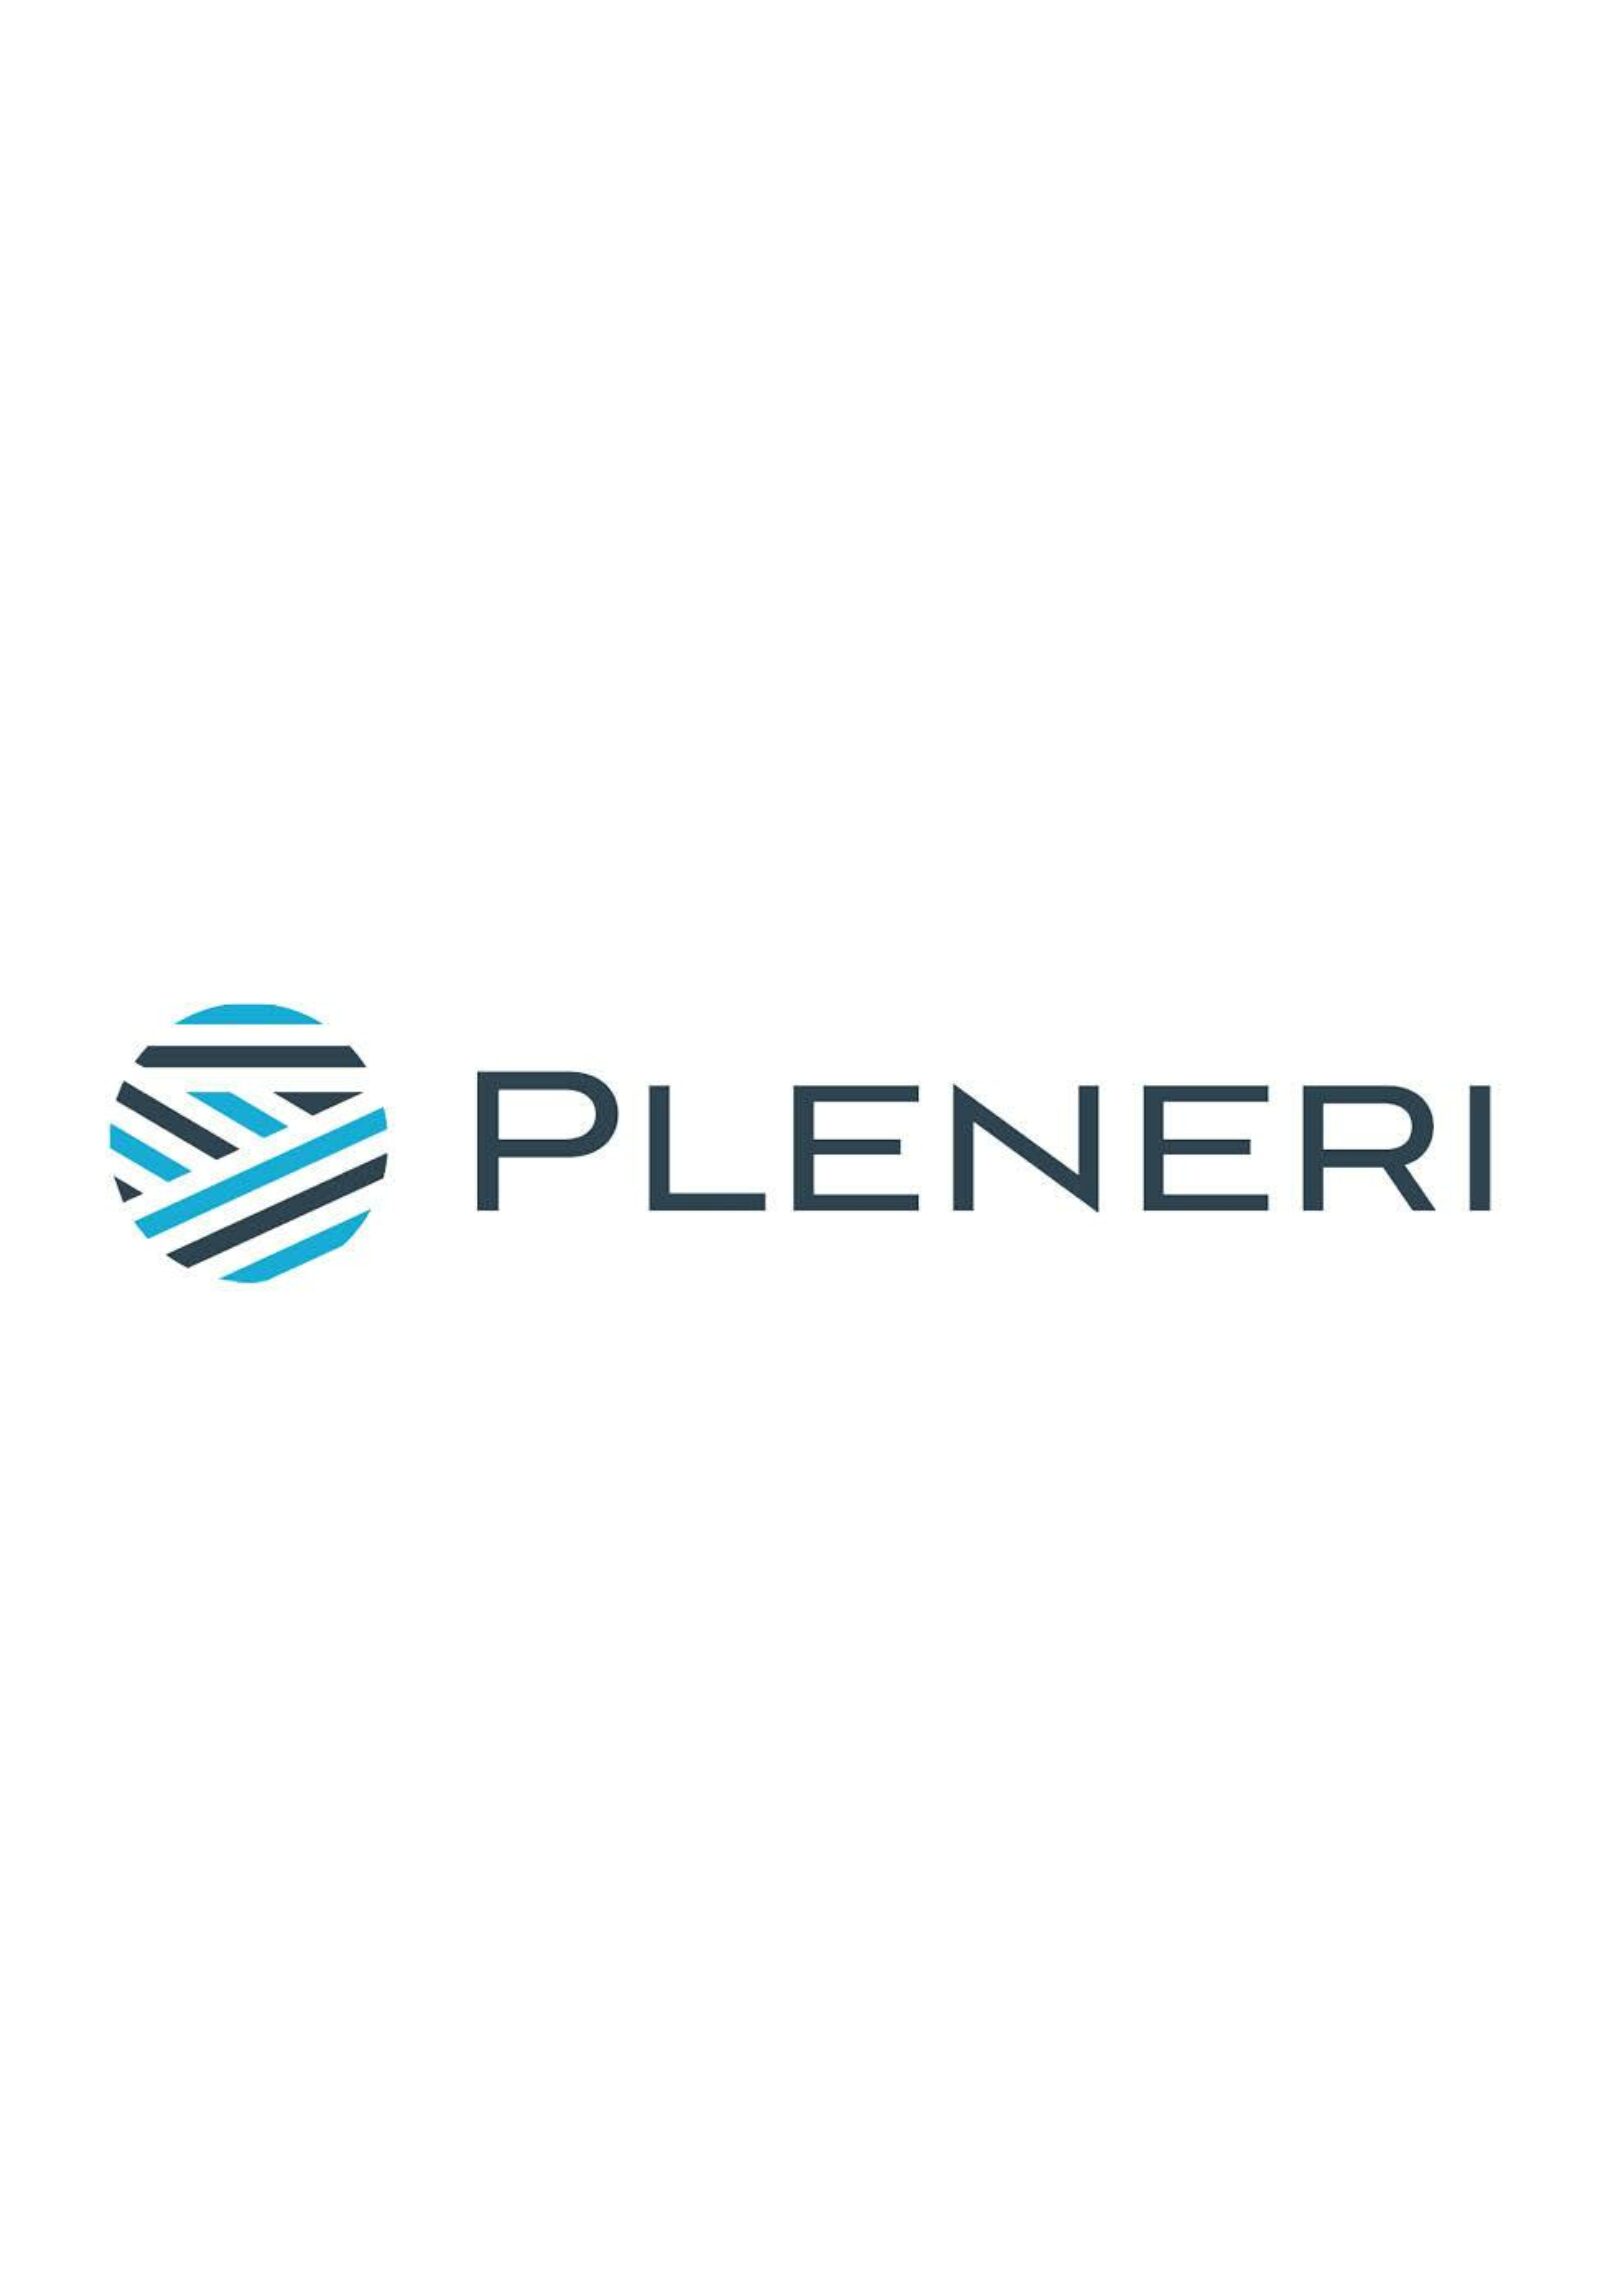 Pleneri Logo & Design